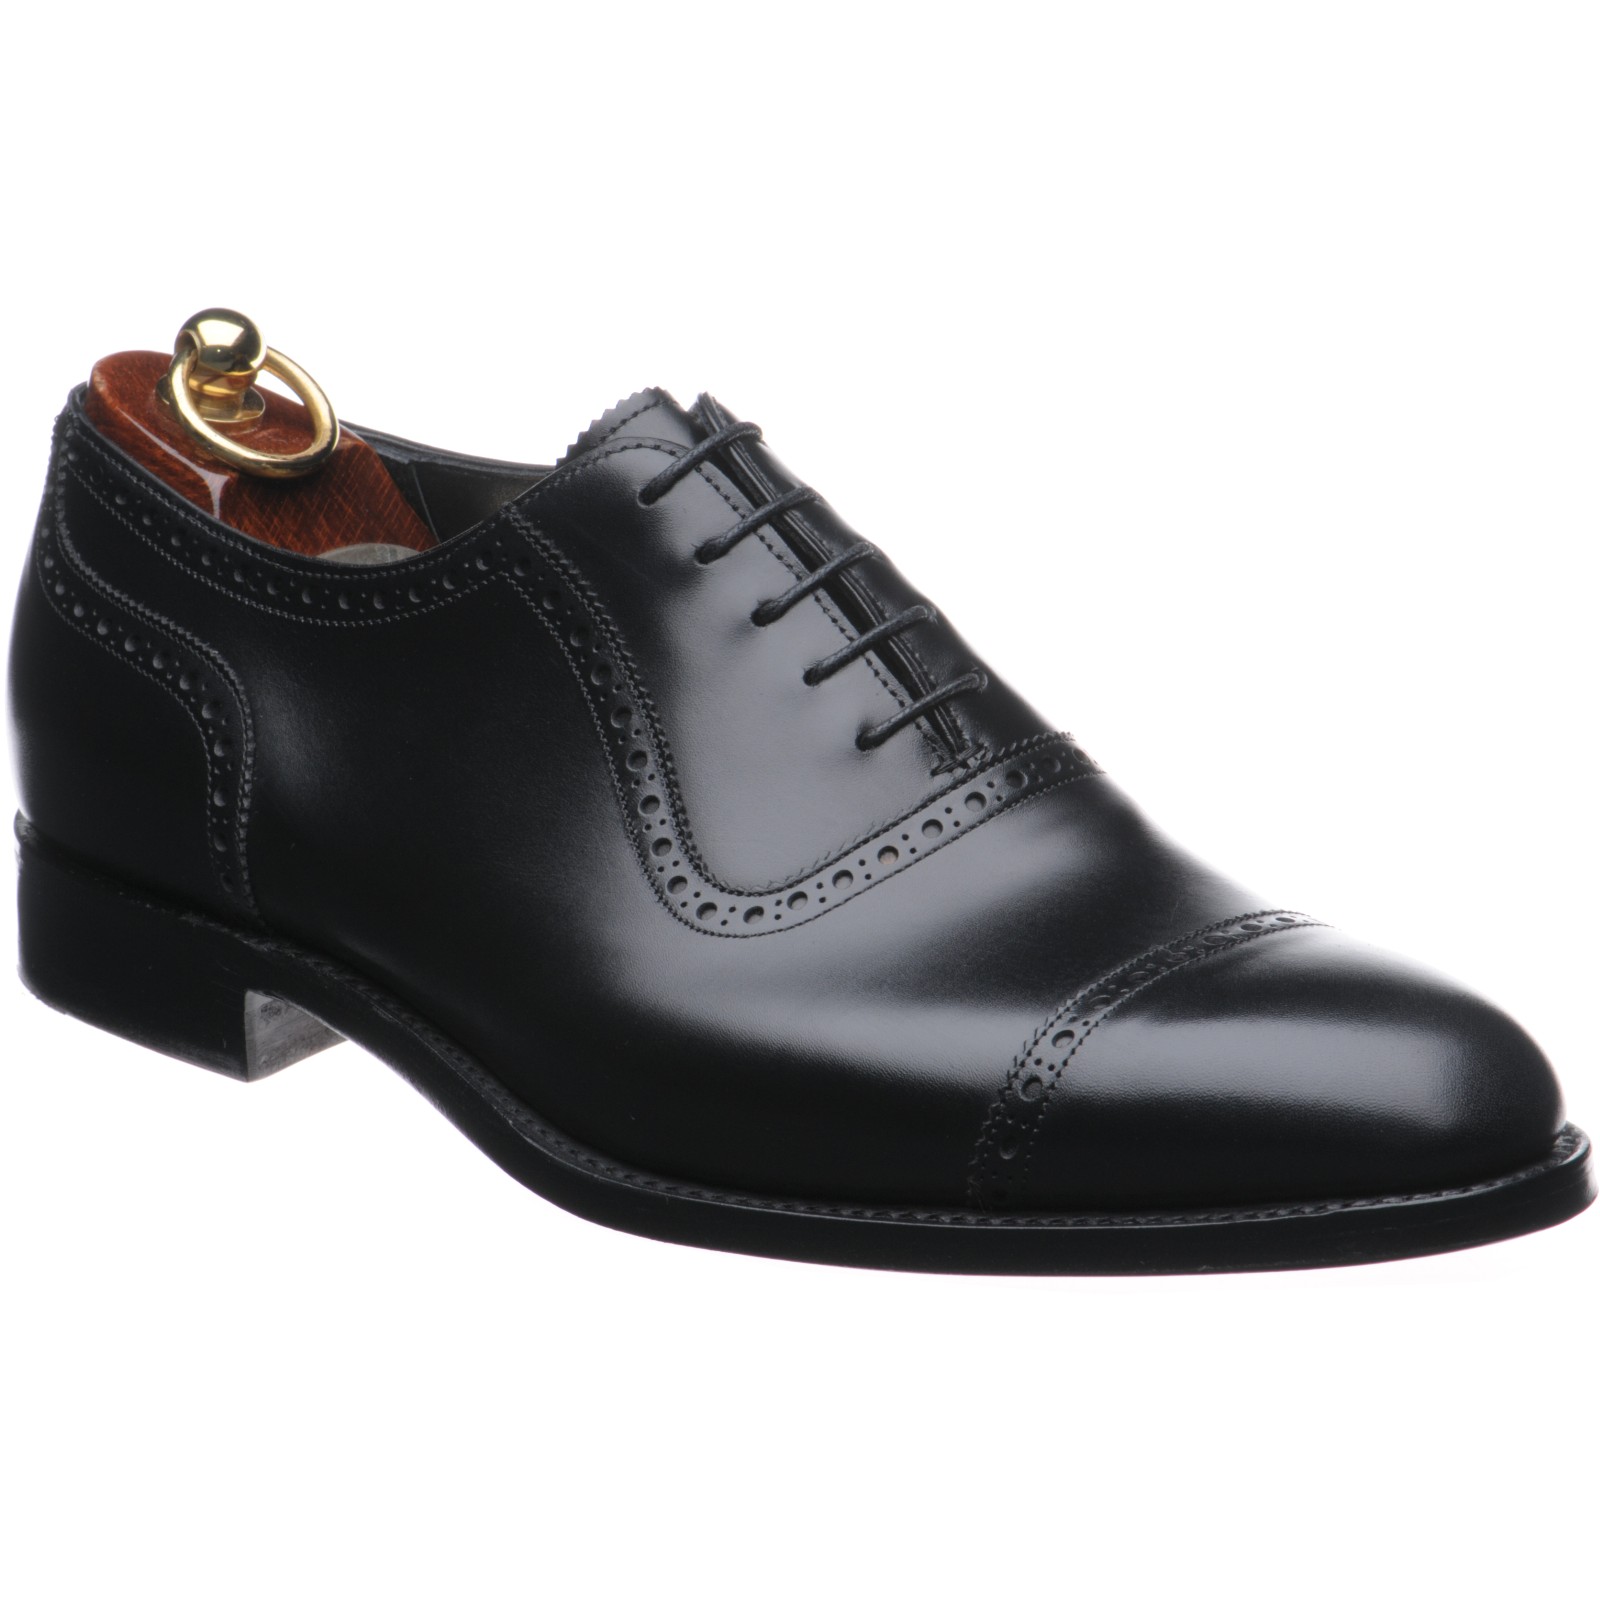 Herring shoes | Herring Premier | Chamberlain semi-brogues in Black ...